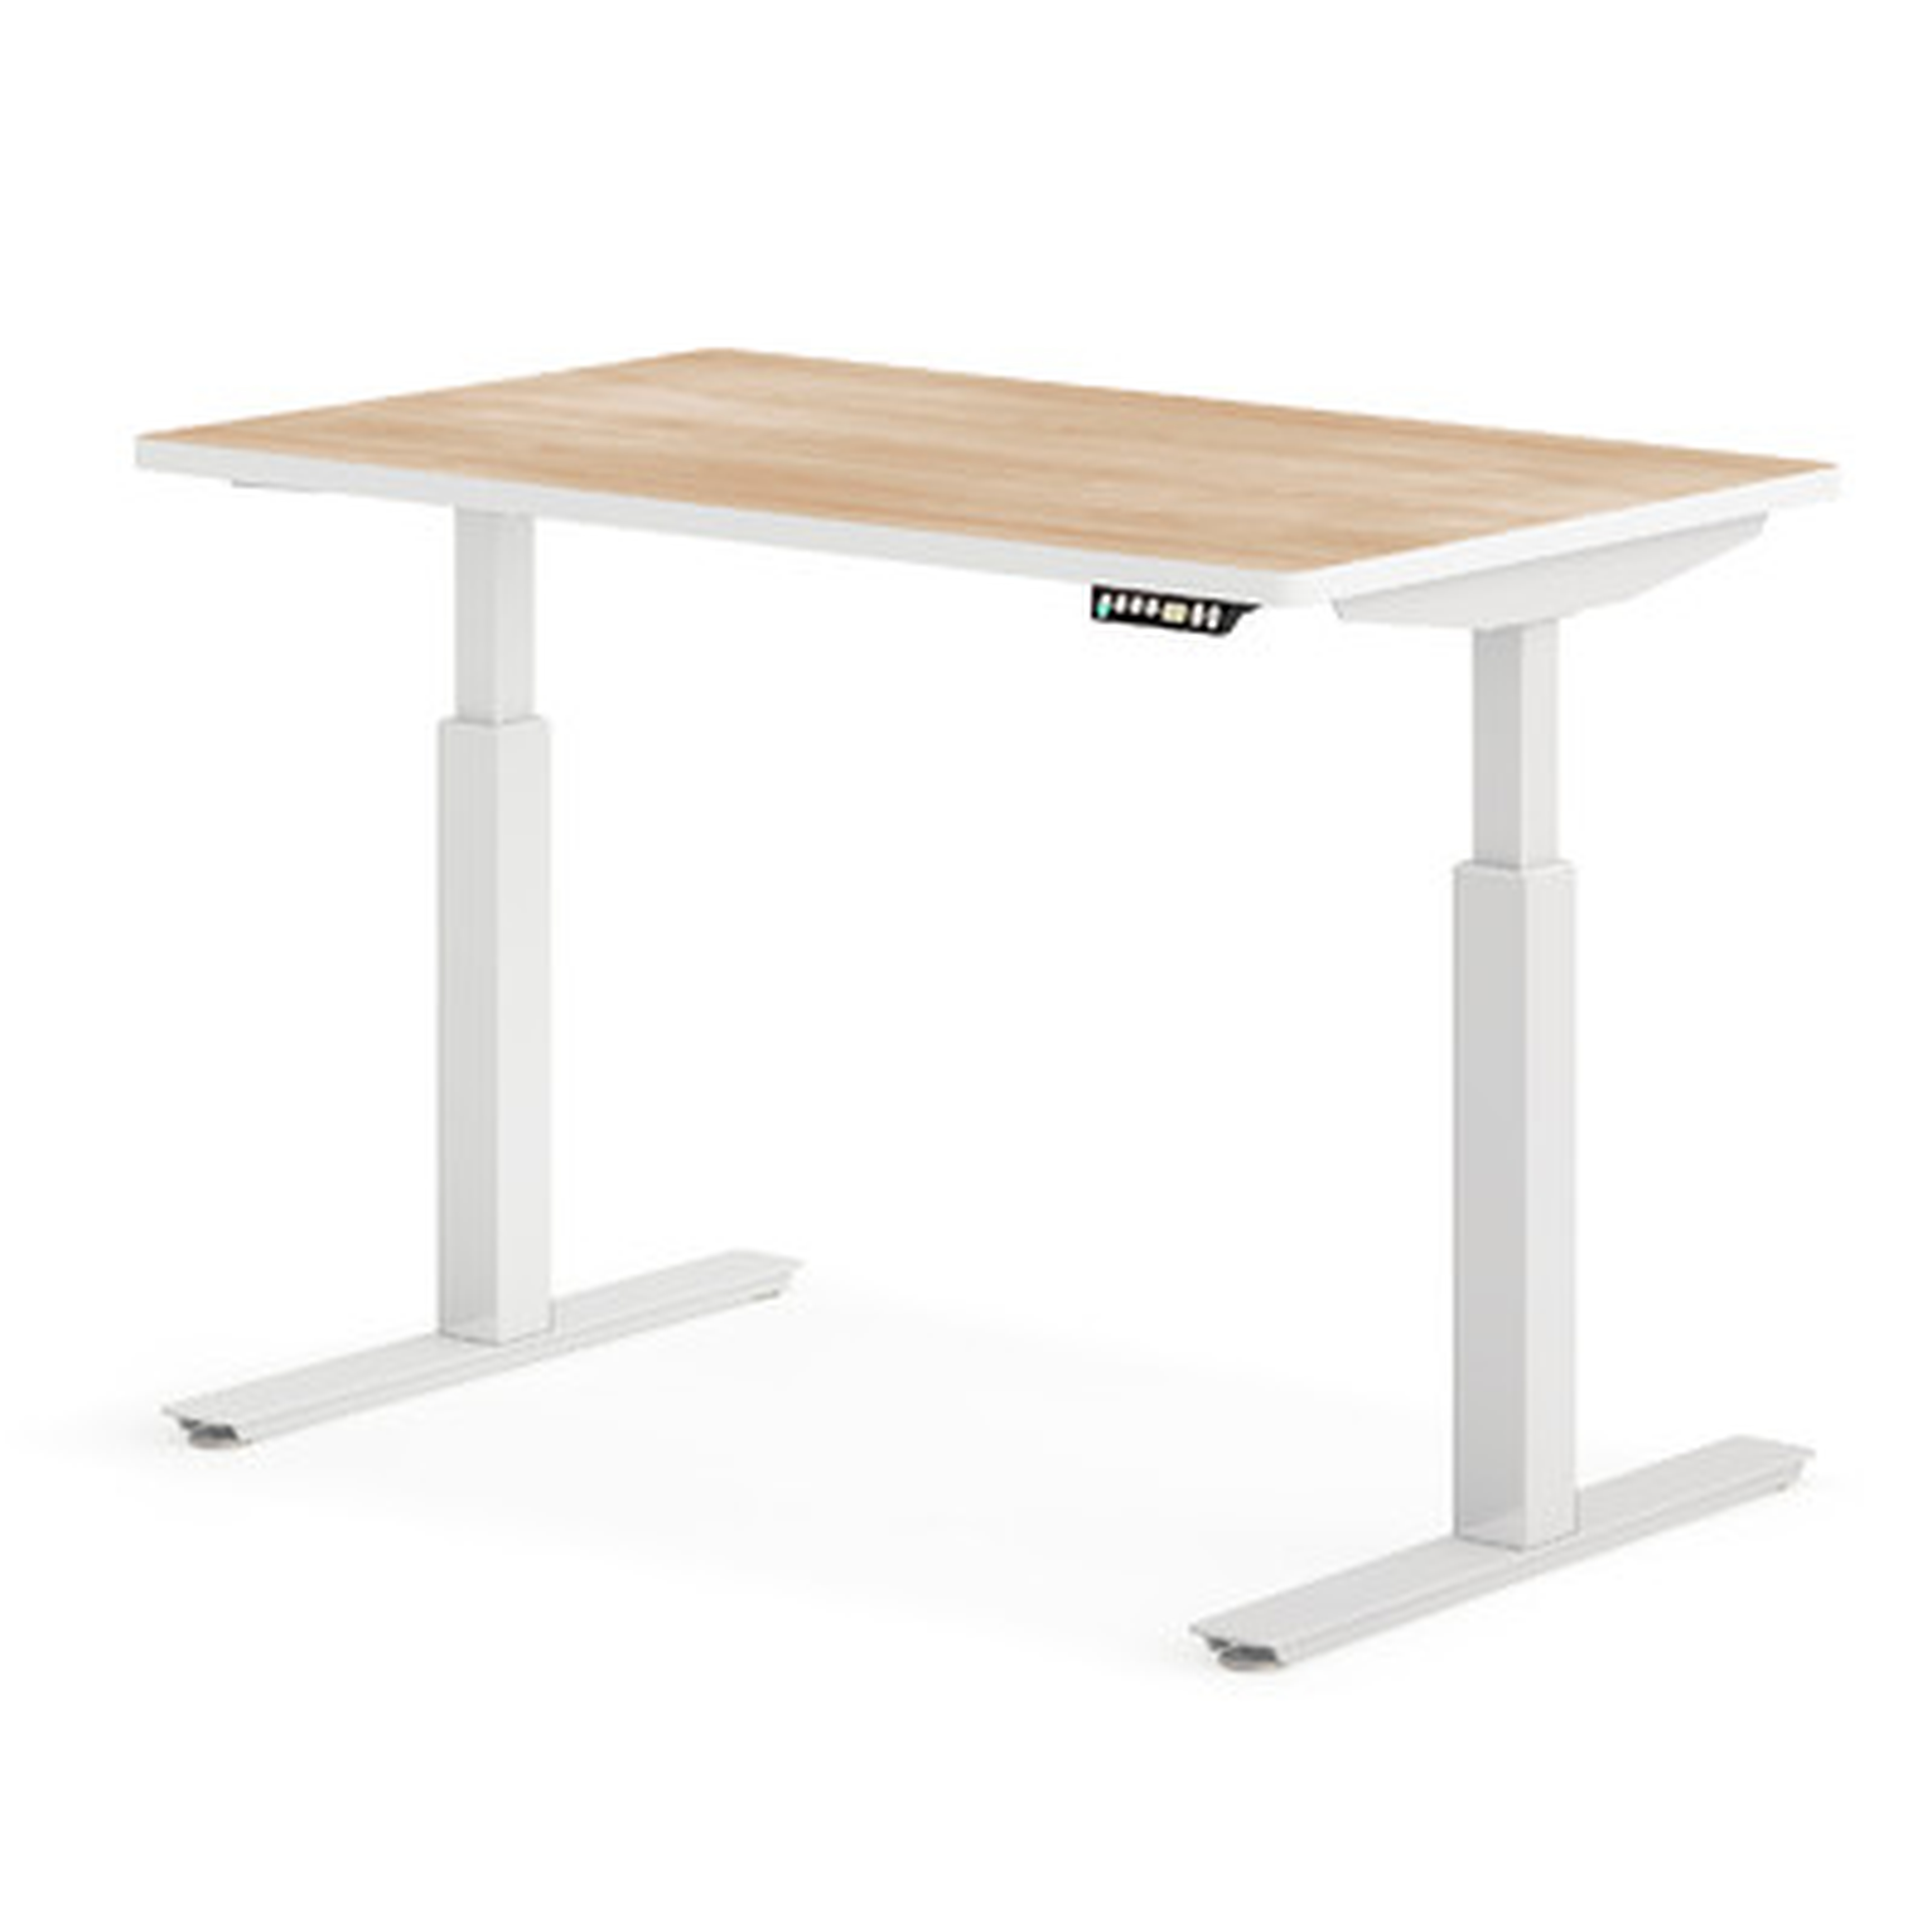 OfficeFlex Sit-To-Stand Standing desk - Wayfair